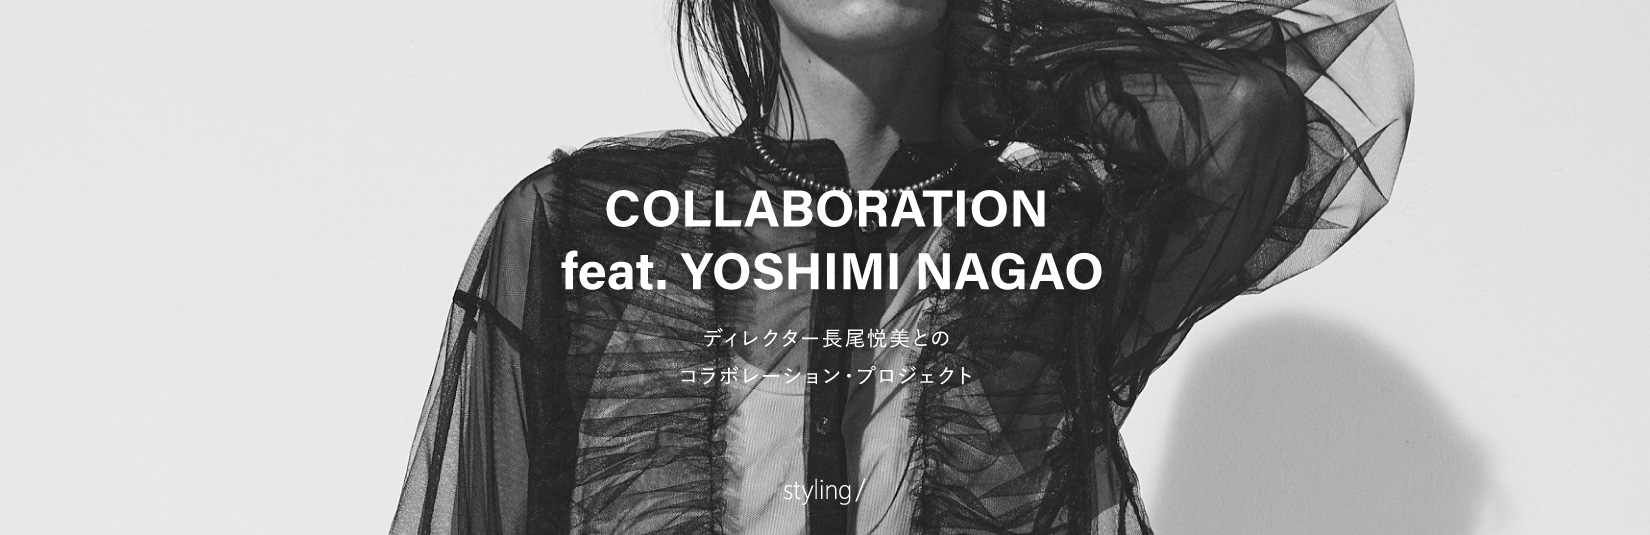 COLLABORATION feat. YOSHIMI NAGAO